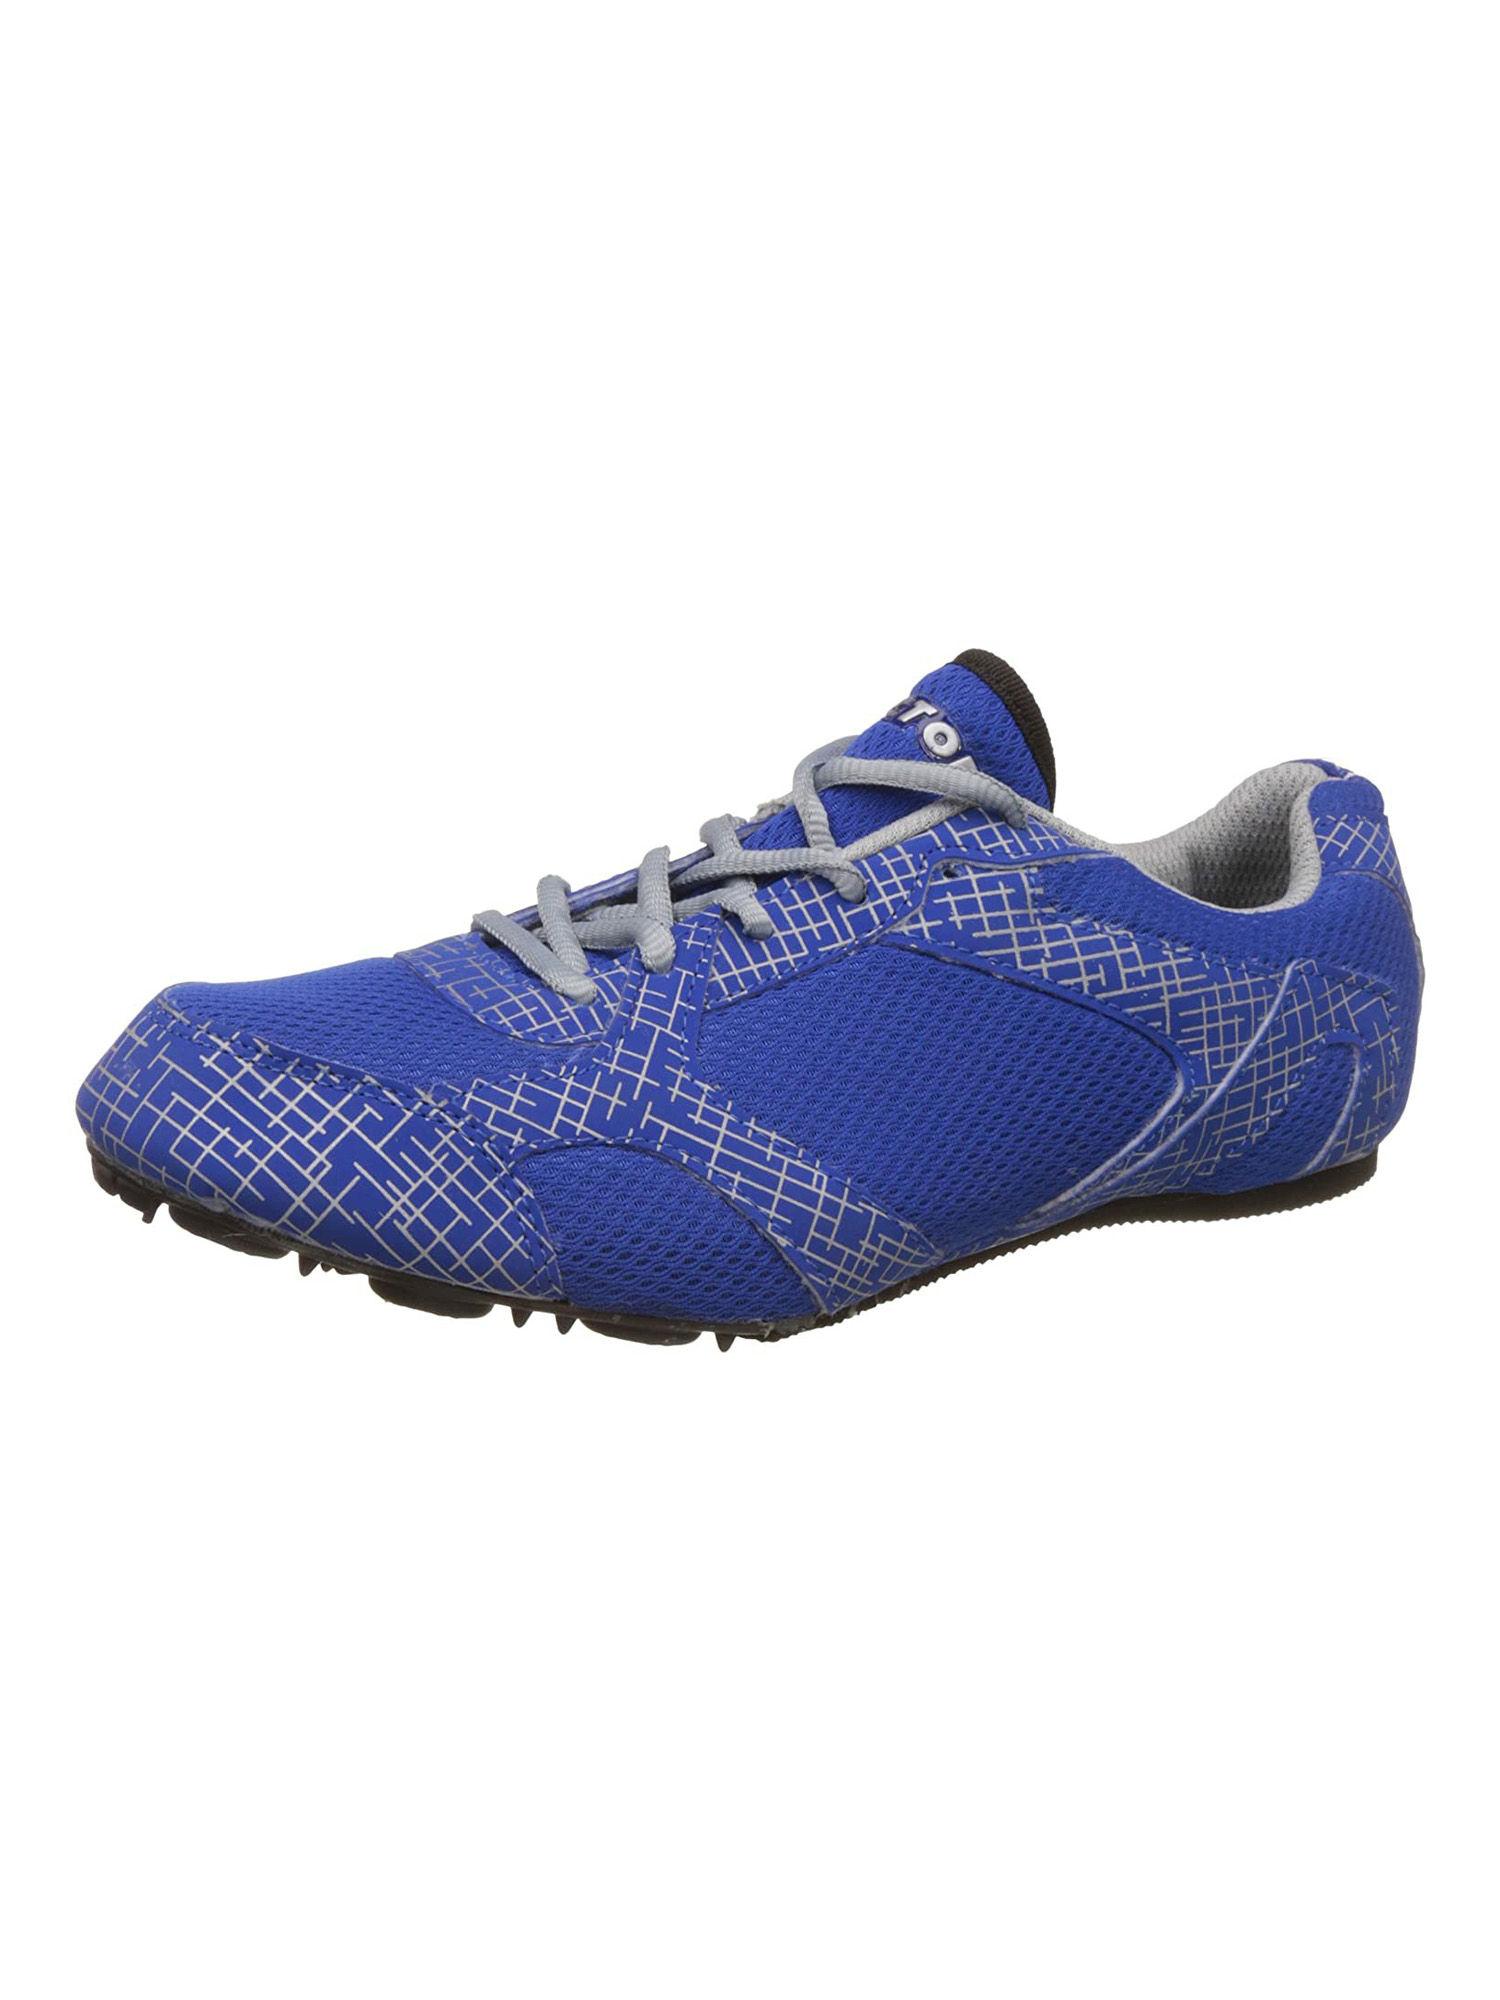 men-sprint-running-shoes-for-men-(blue-grey)